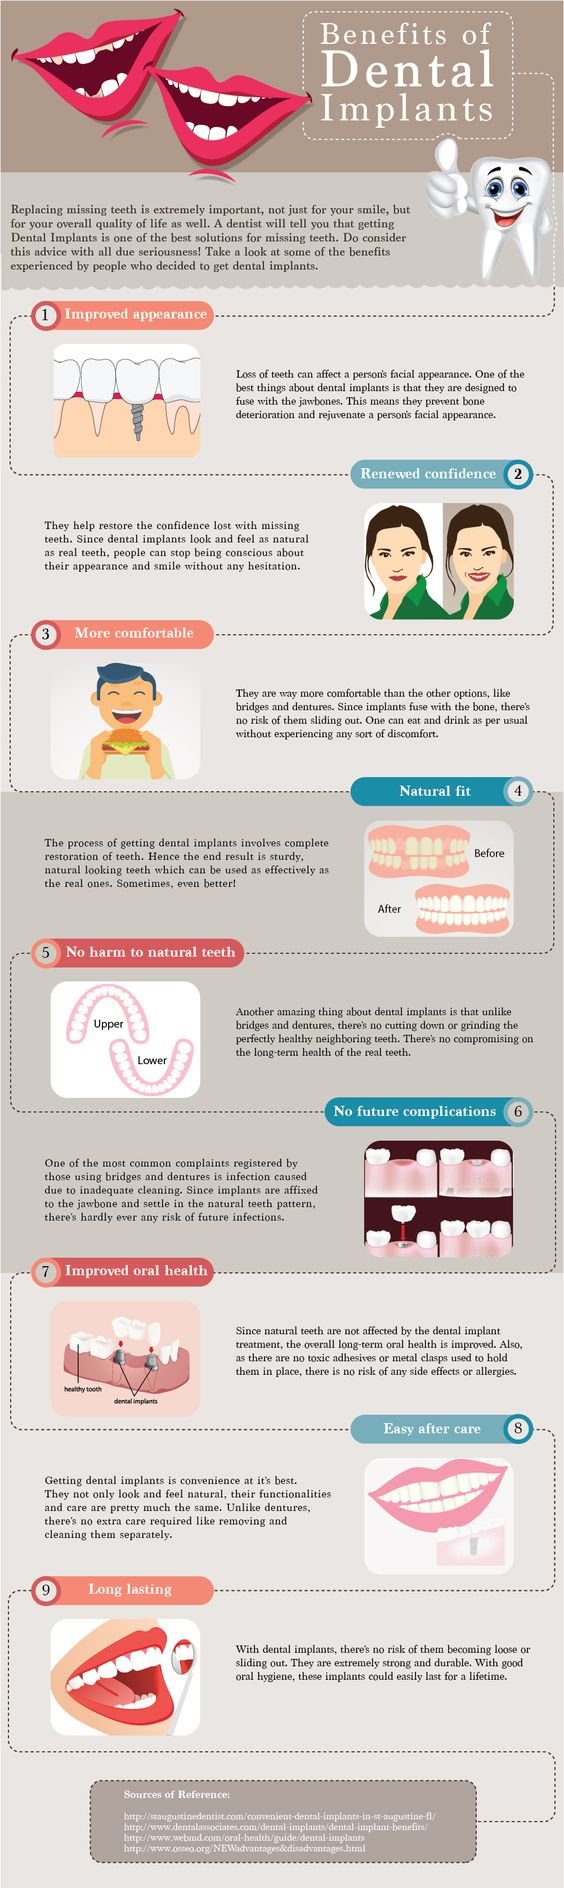 benefits of dental implants 1